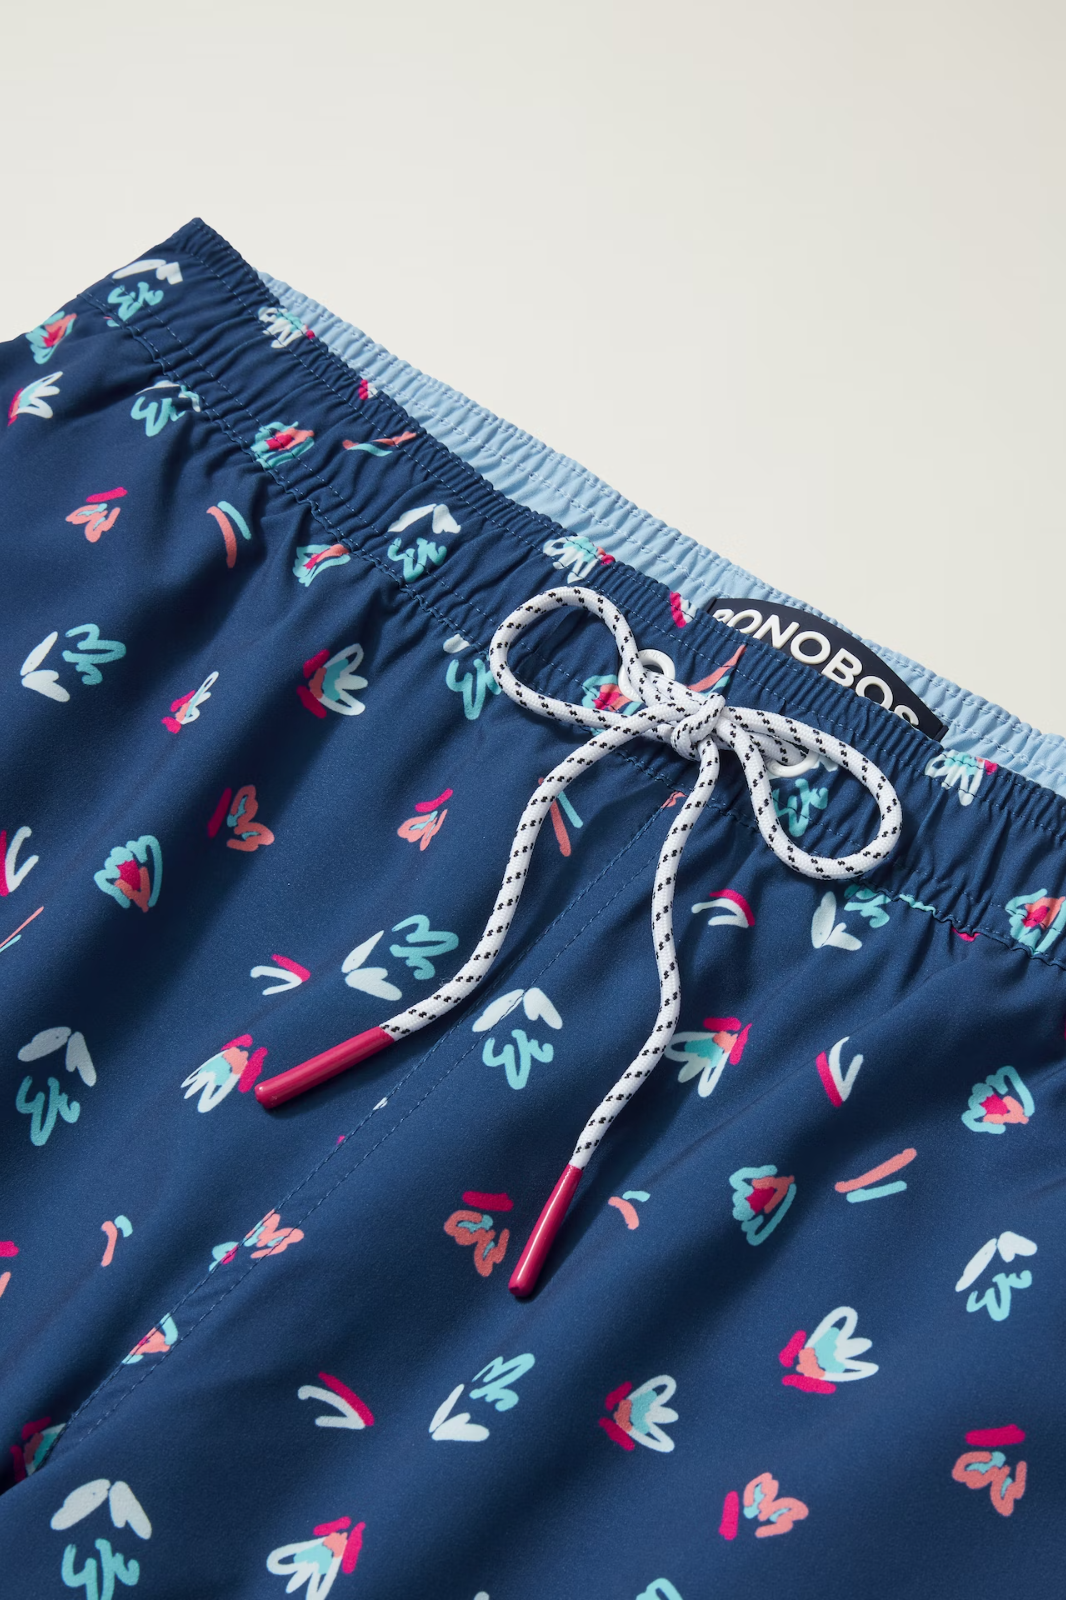 Bonobos Riviera Recycled Swim Trunks Navy Sketch Floral Shorts